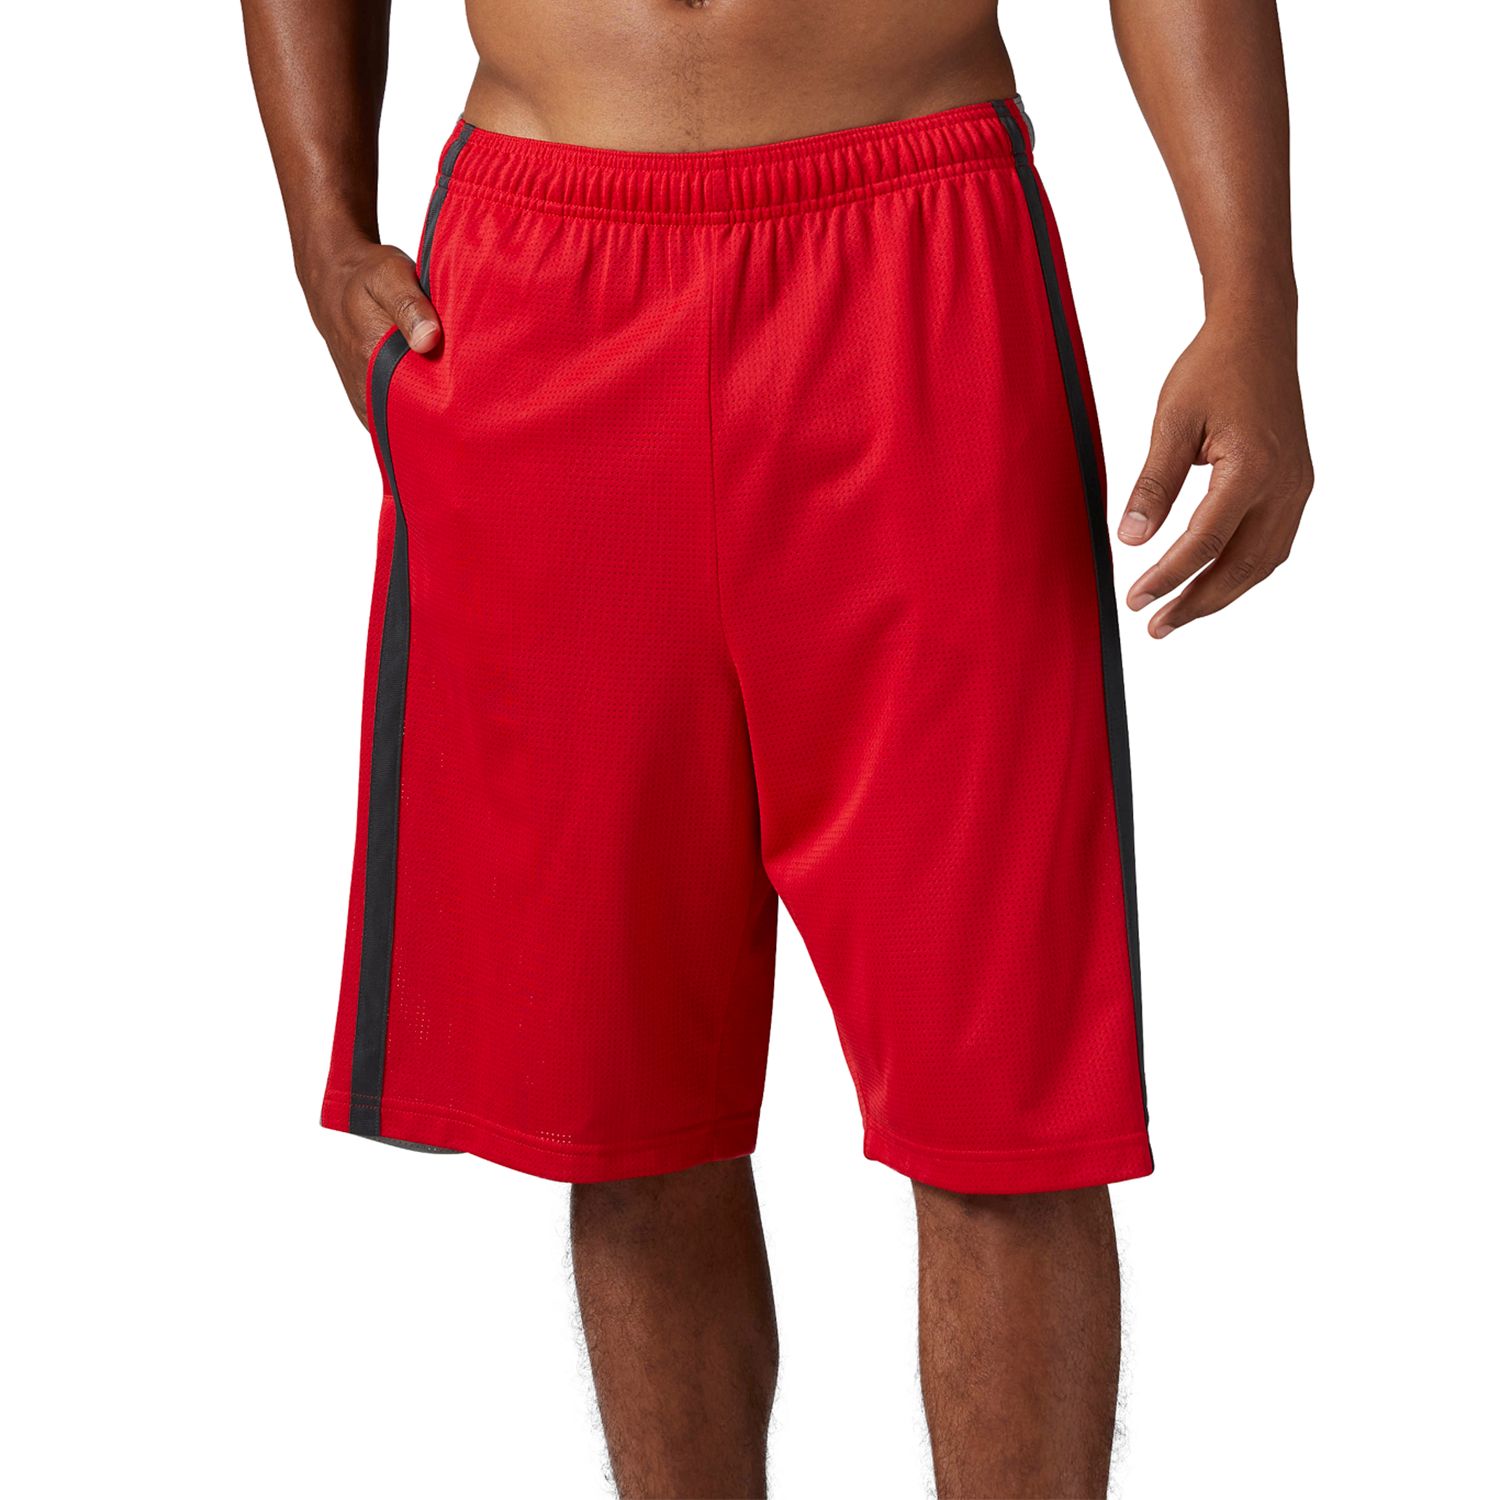 Colorblock Mesh 10-inch Basketball Shorts